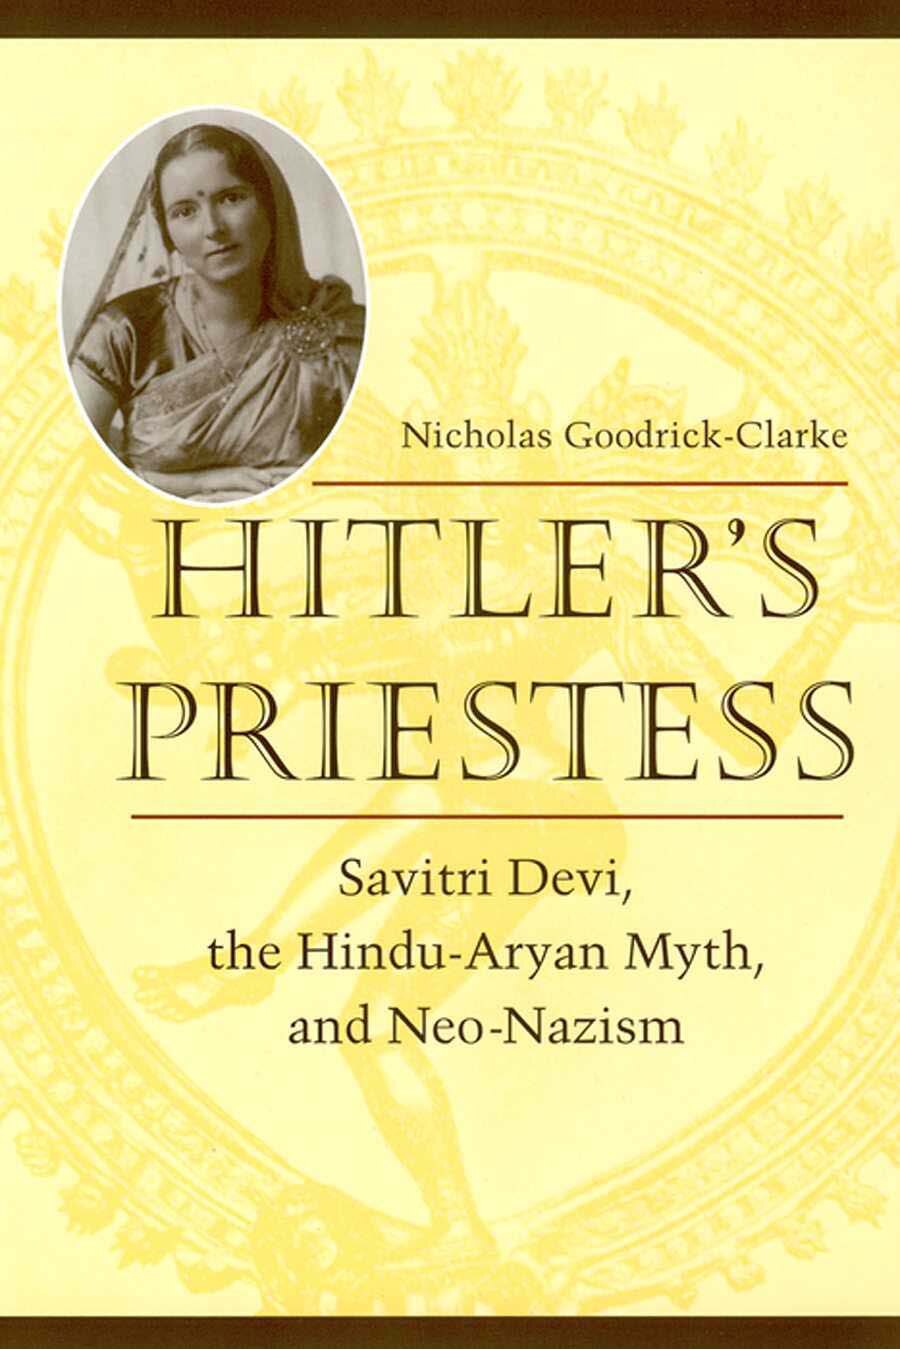 Goodrick-Clarke, Nicholas; Hitler's Priestess - Savitri Devi, the Hindu-Aryan Myth and Neo-Nazism